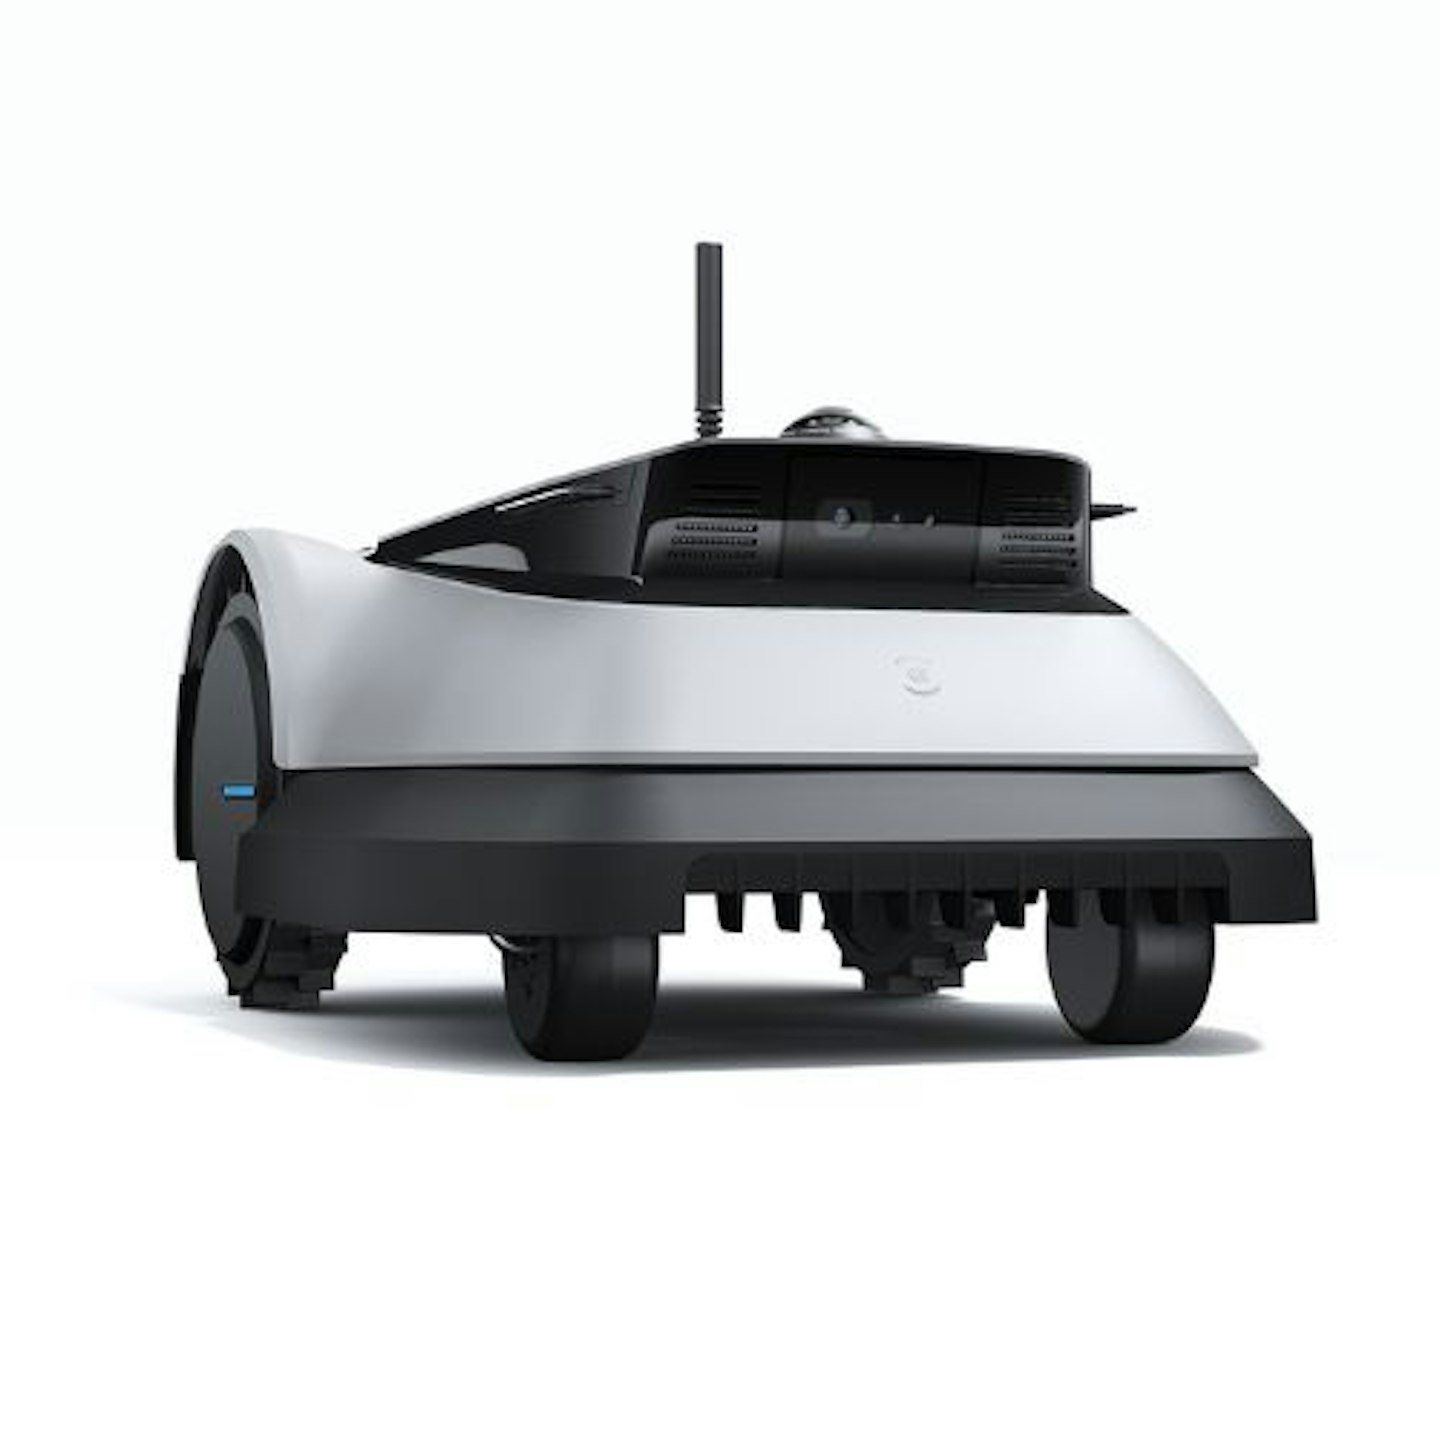 ECOVACS GOAT G1-800 Robotic Lawn Mower 